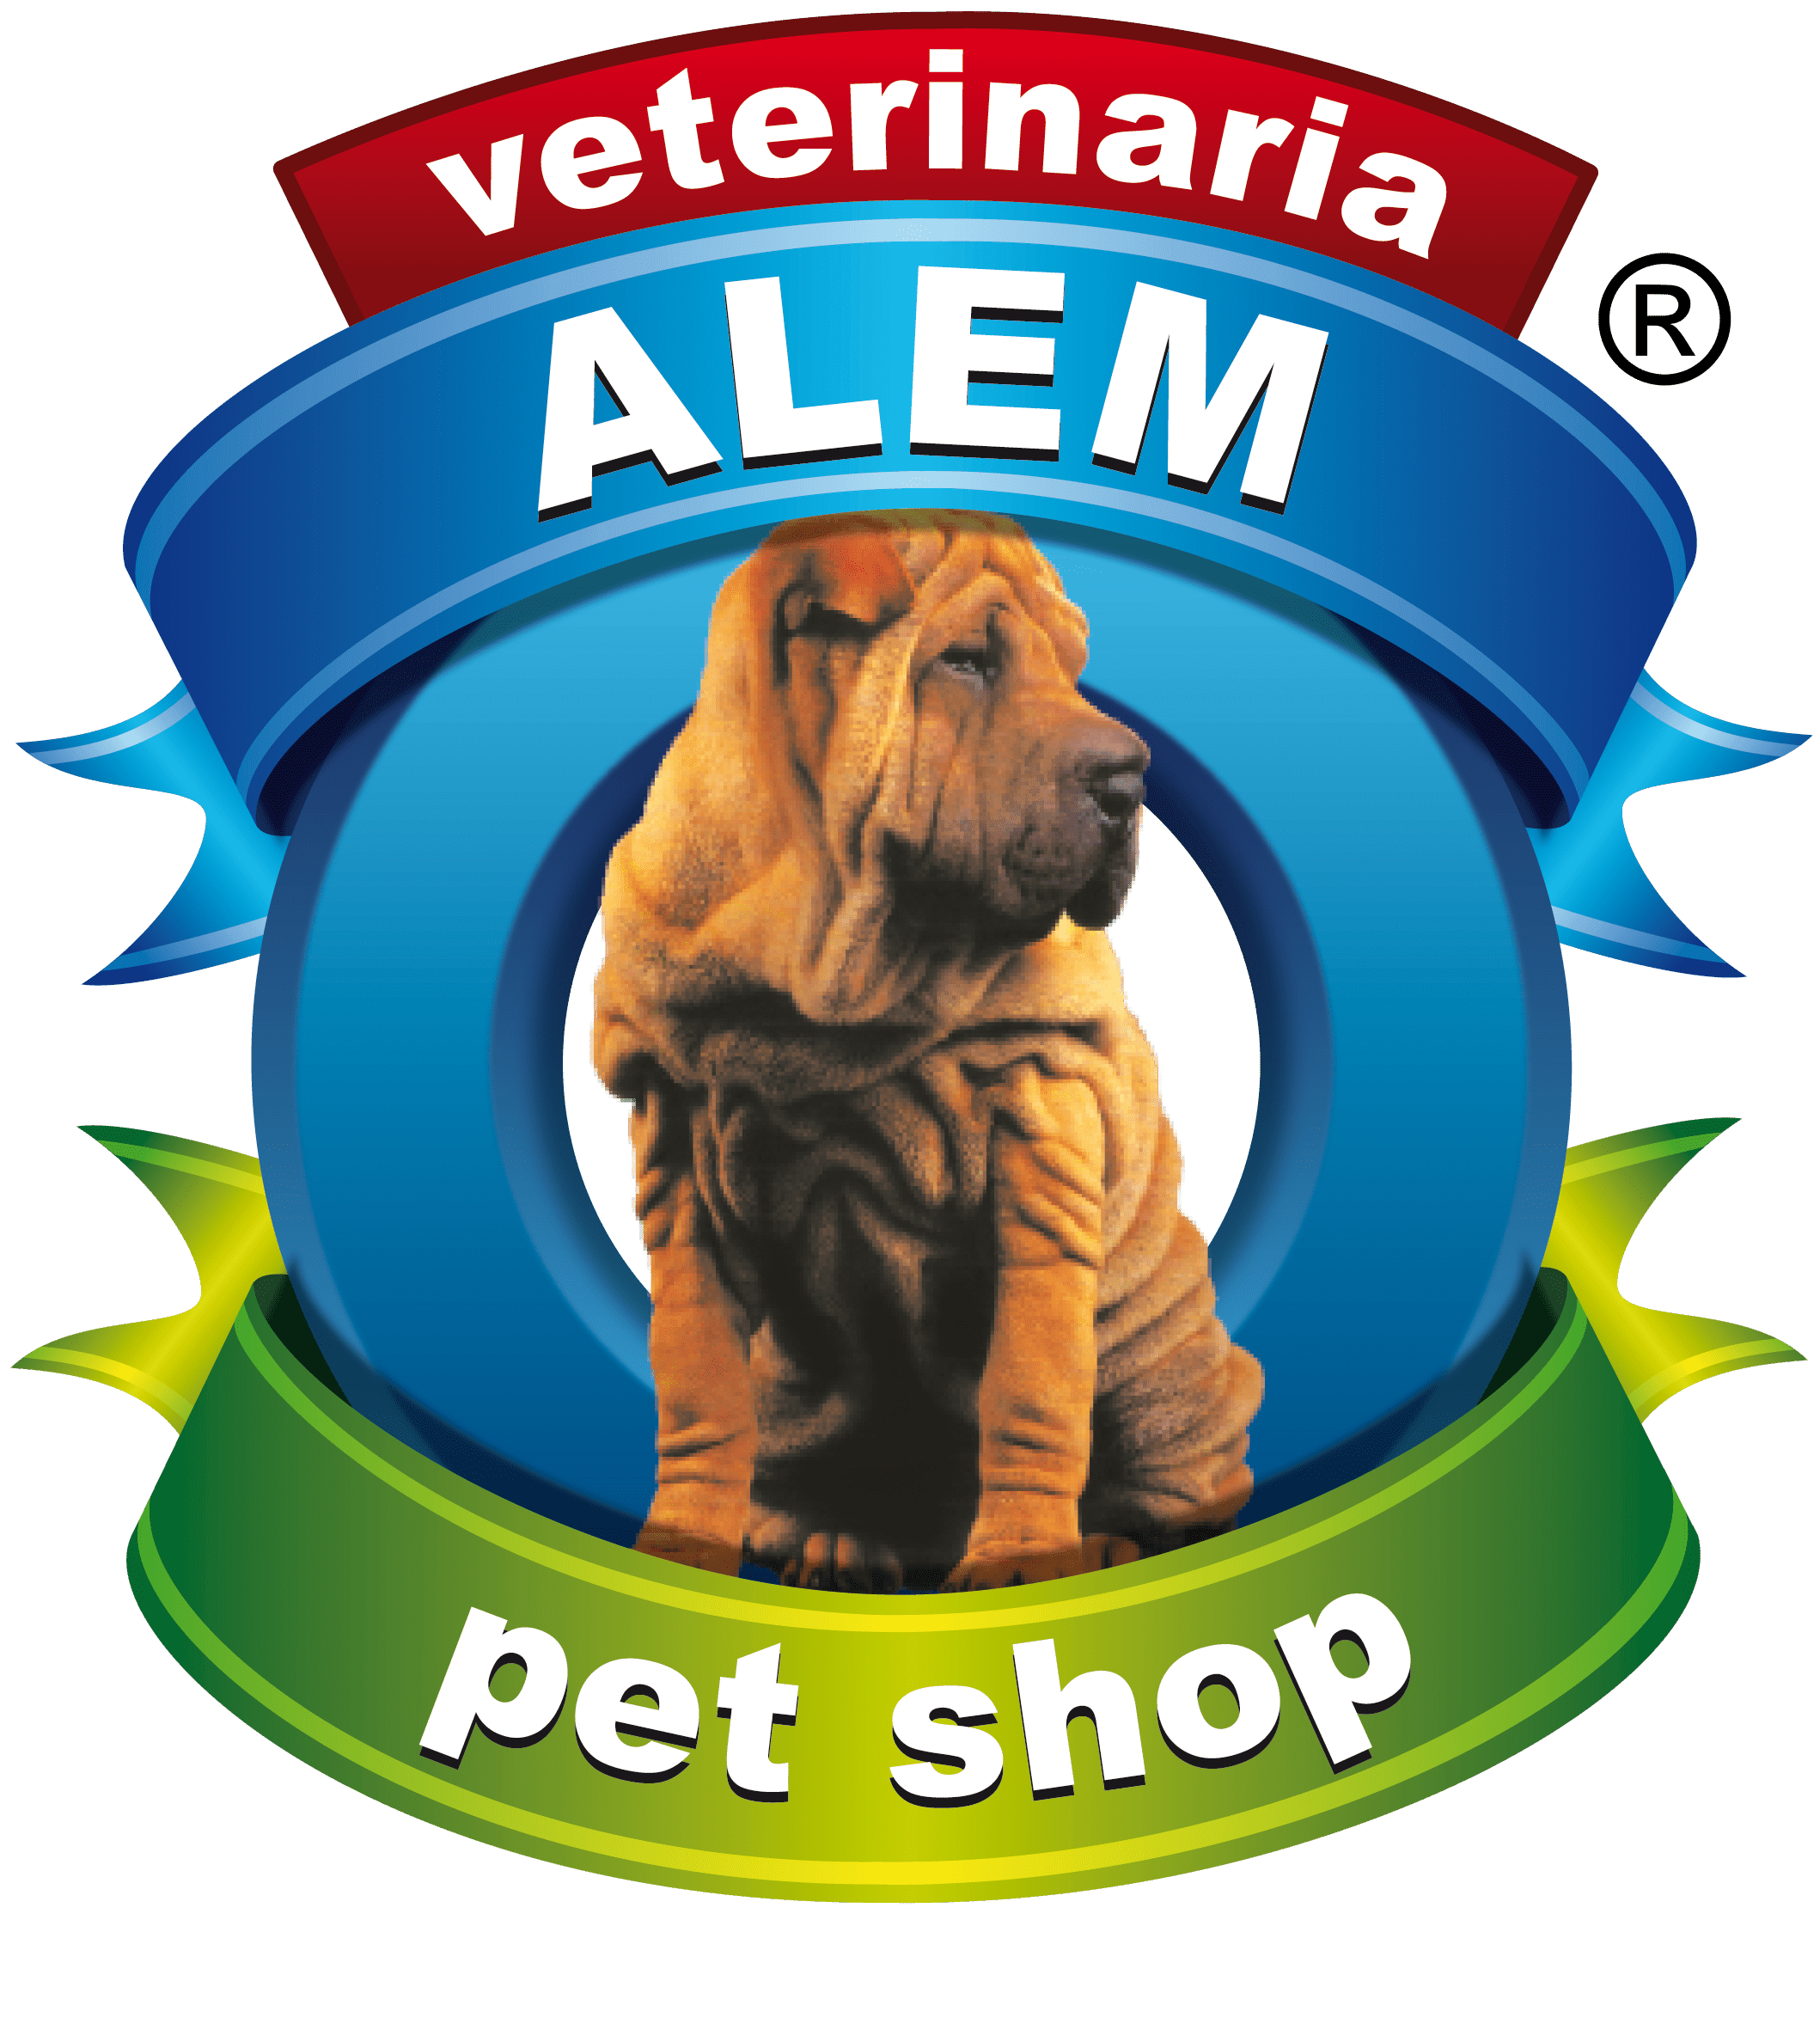 www.veterinariaalem.com